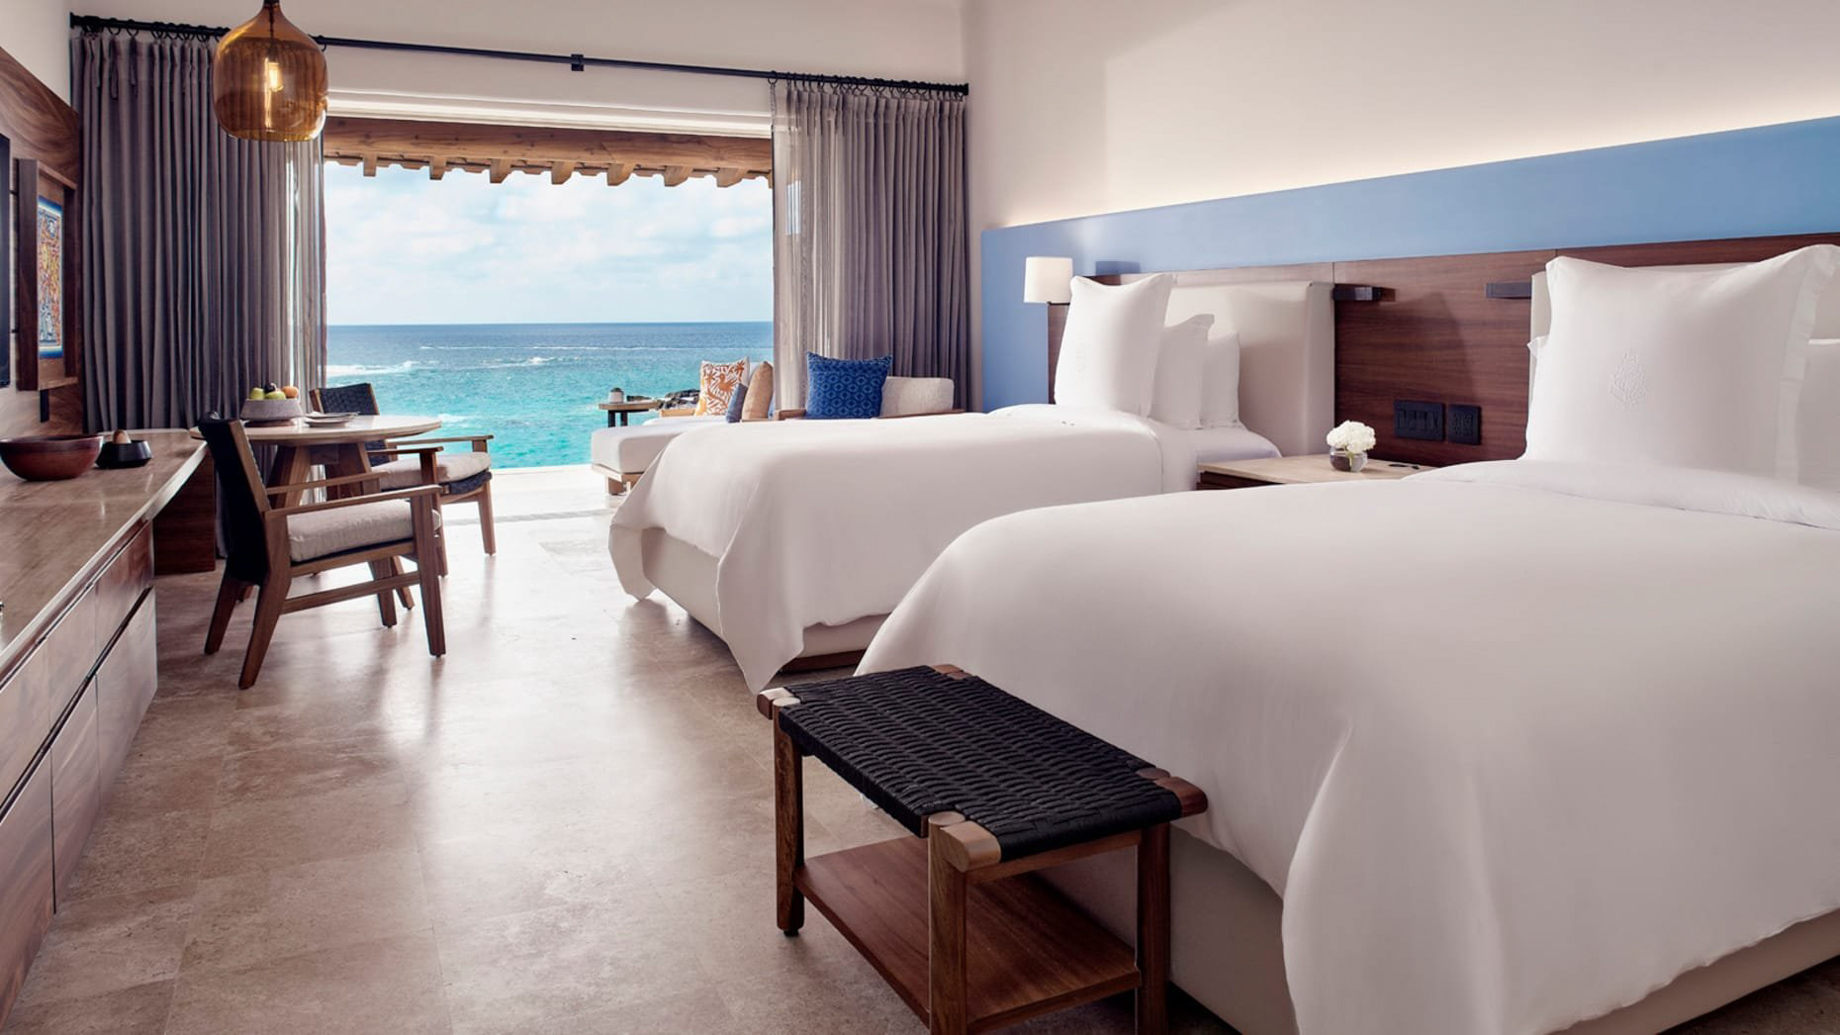 Four Seasons Resort Punta Mita – Nayarit, Mexico – Oceanfront Casita Bedroom Sea View